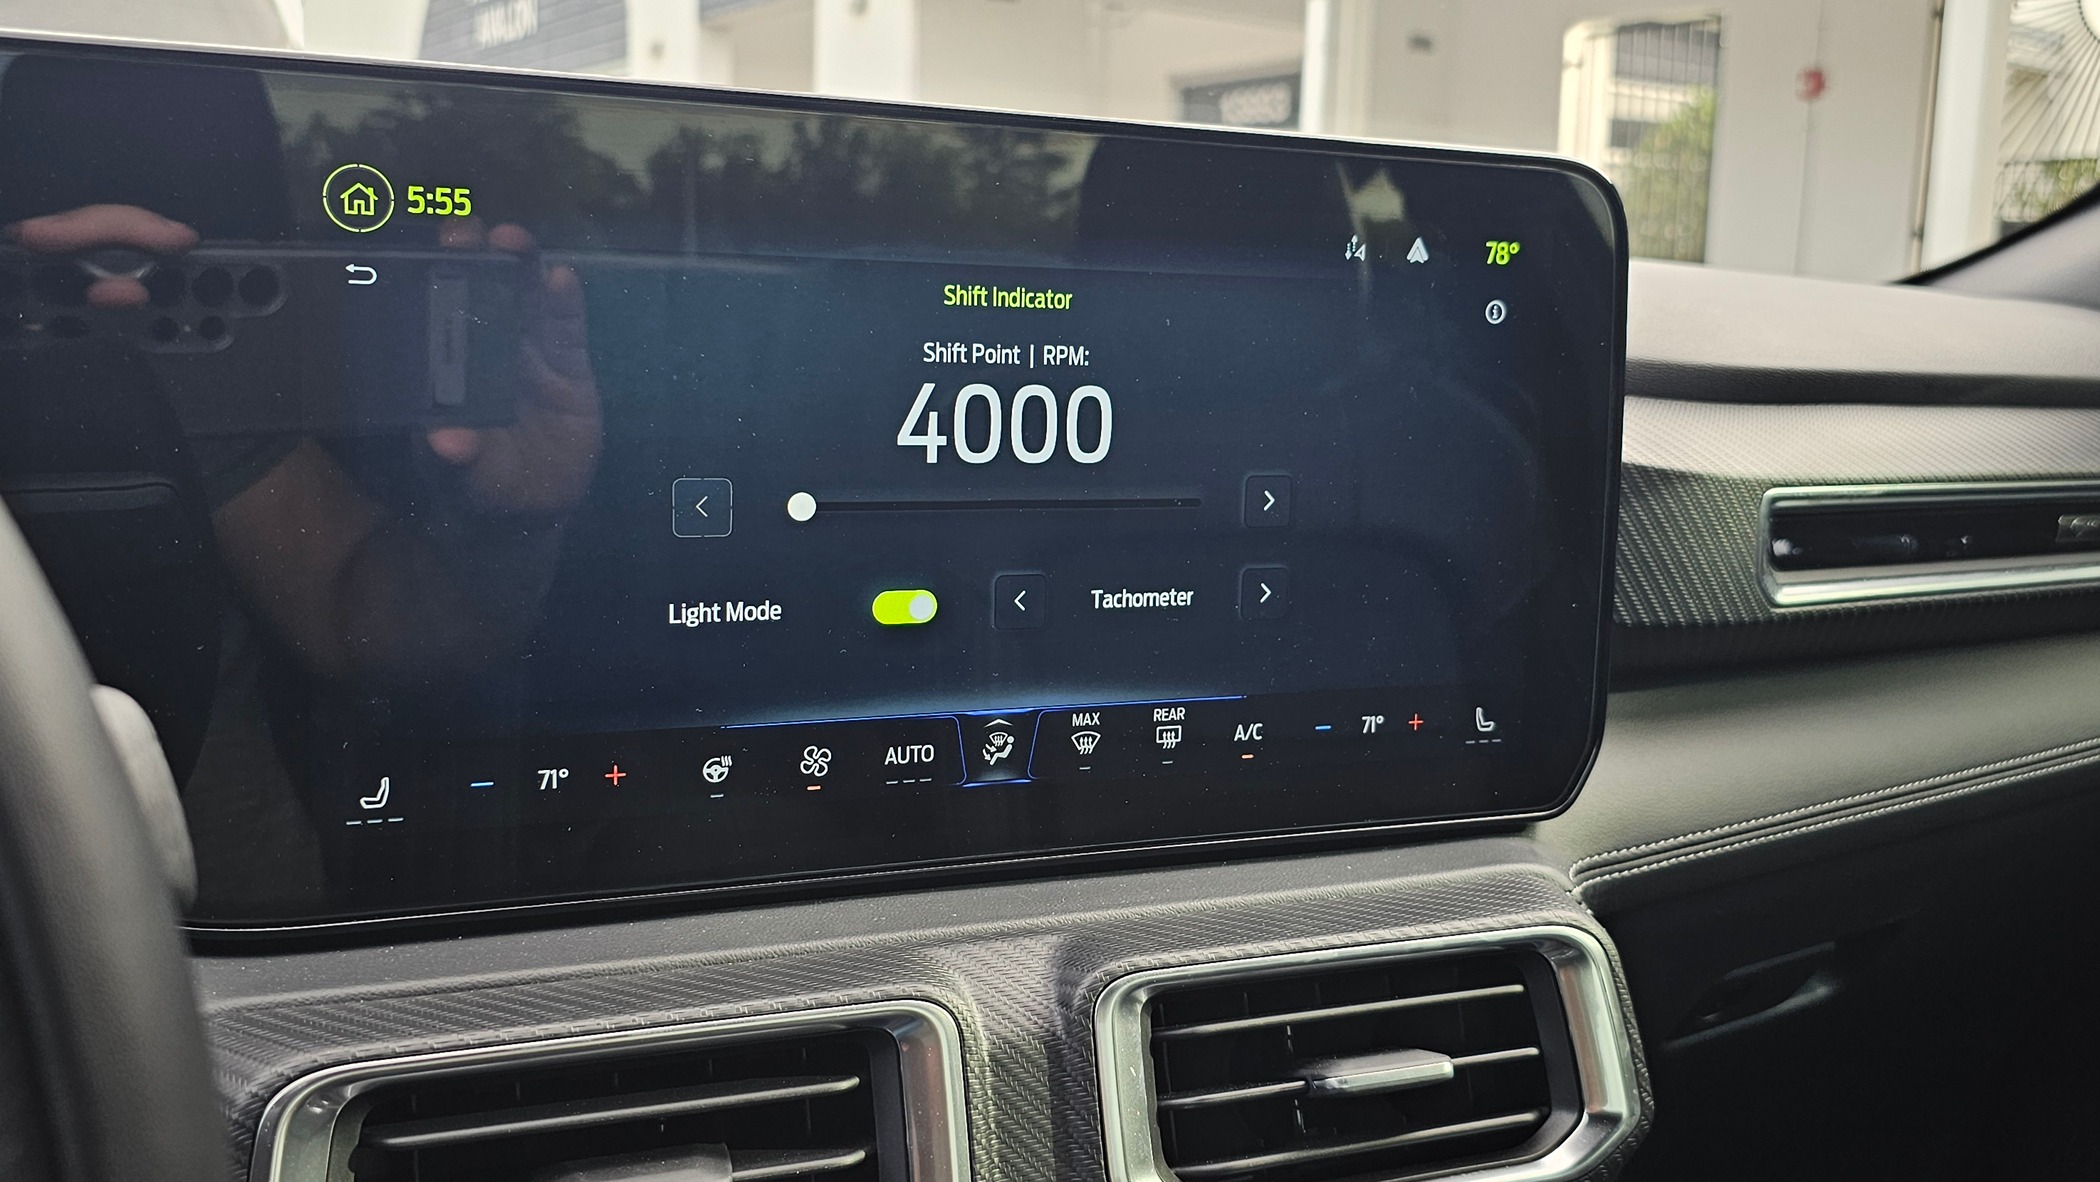 S650 Mustang Shift indicator keeps resetting 1000045707